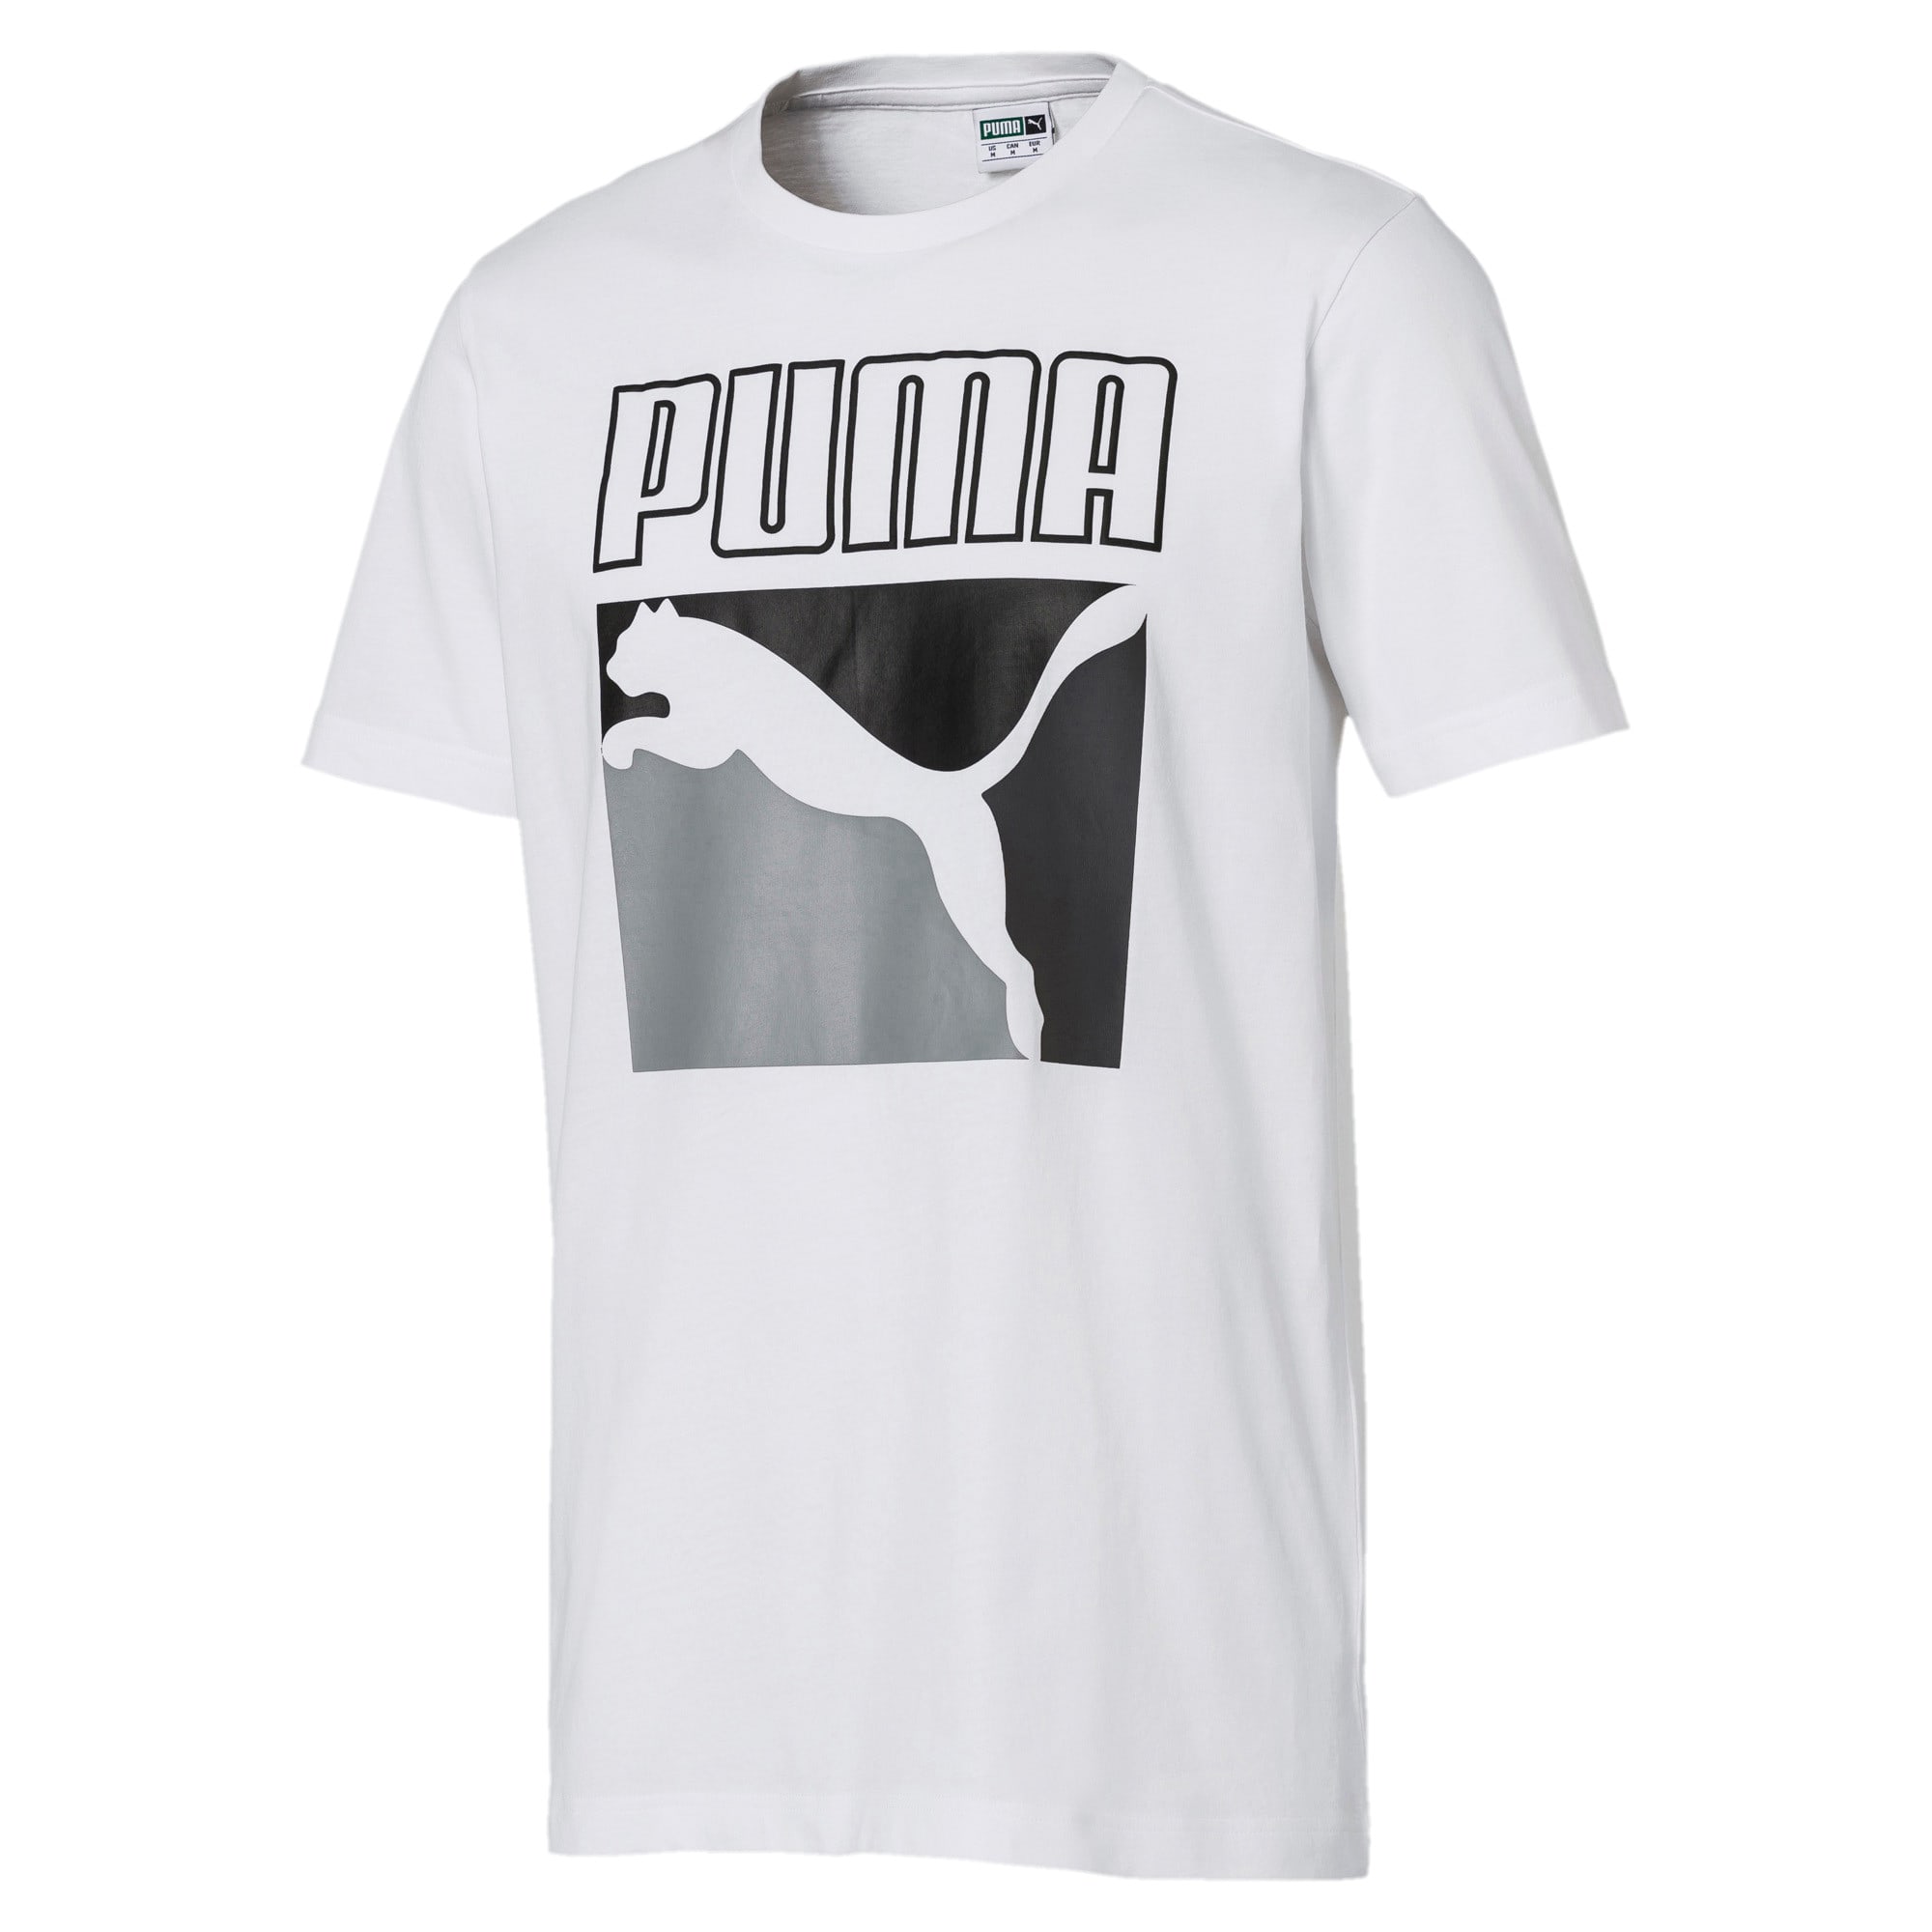 White Box Puma T Shirt Cheap Price Cdb07a0 Barcelonafawomen Com